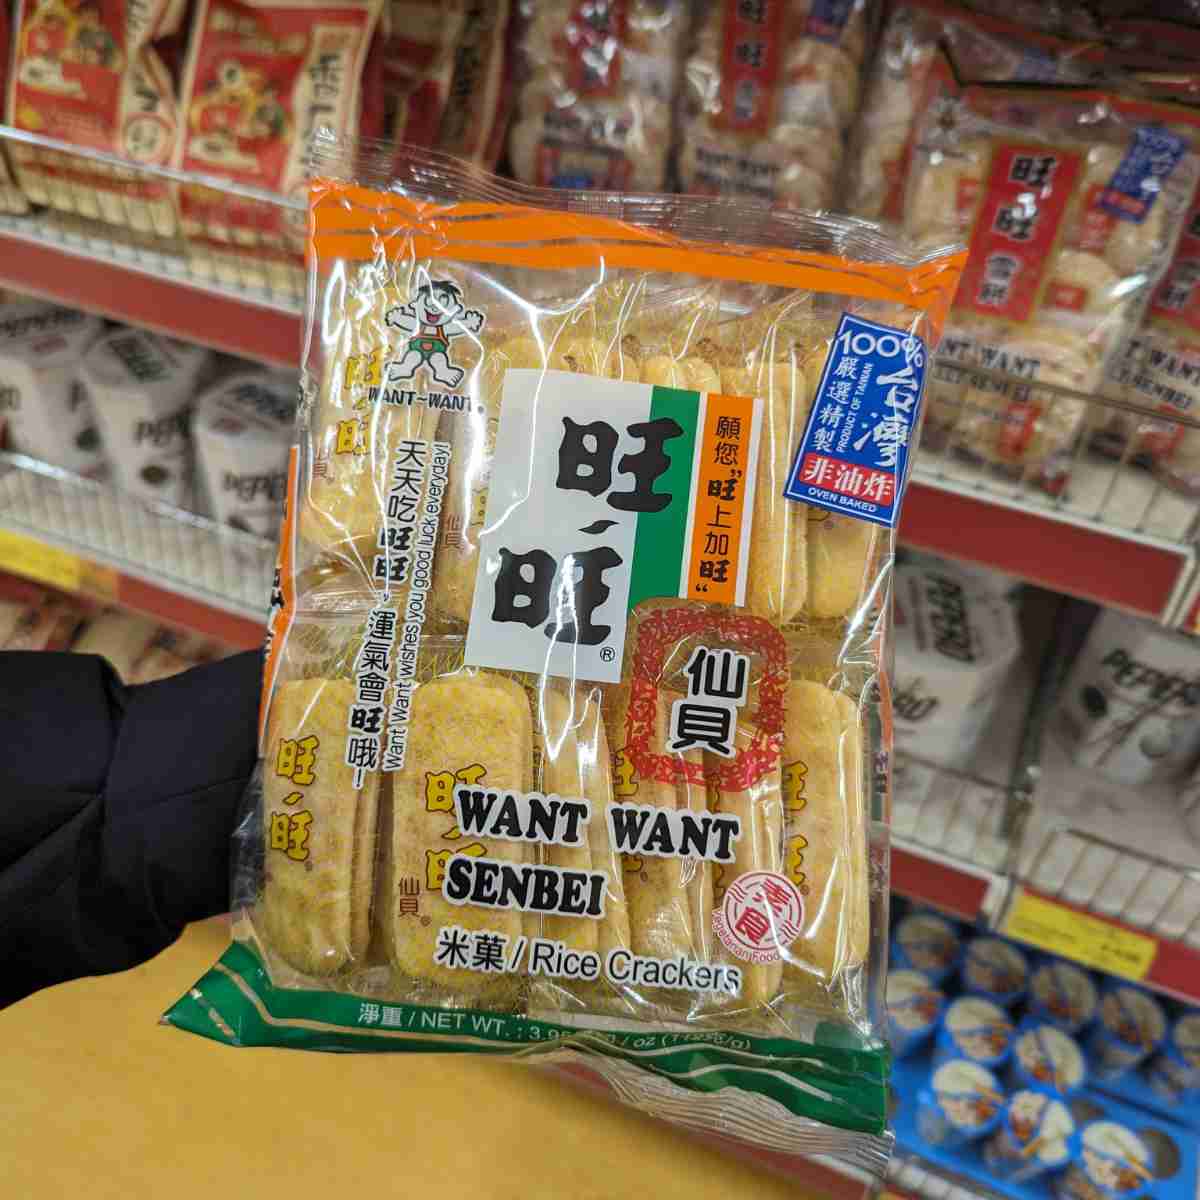 Wan wan rice crackers